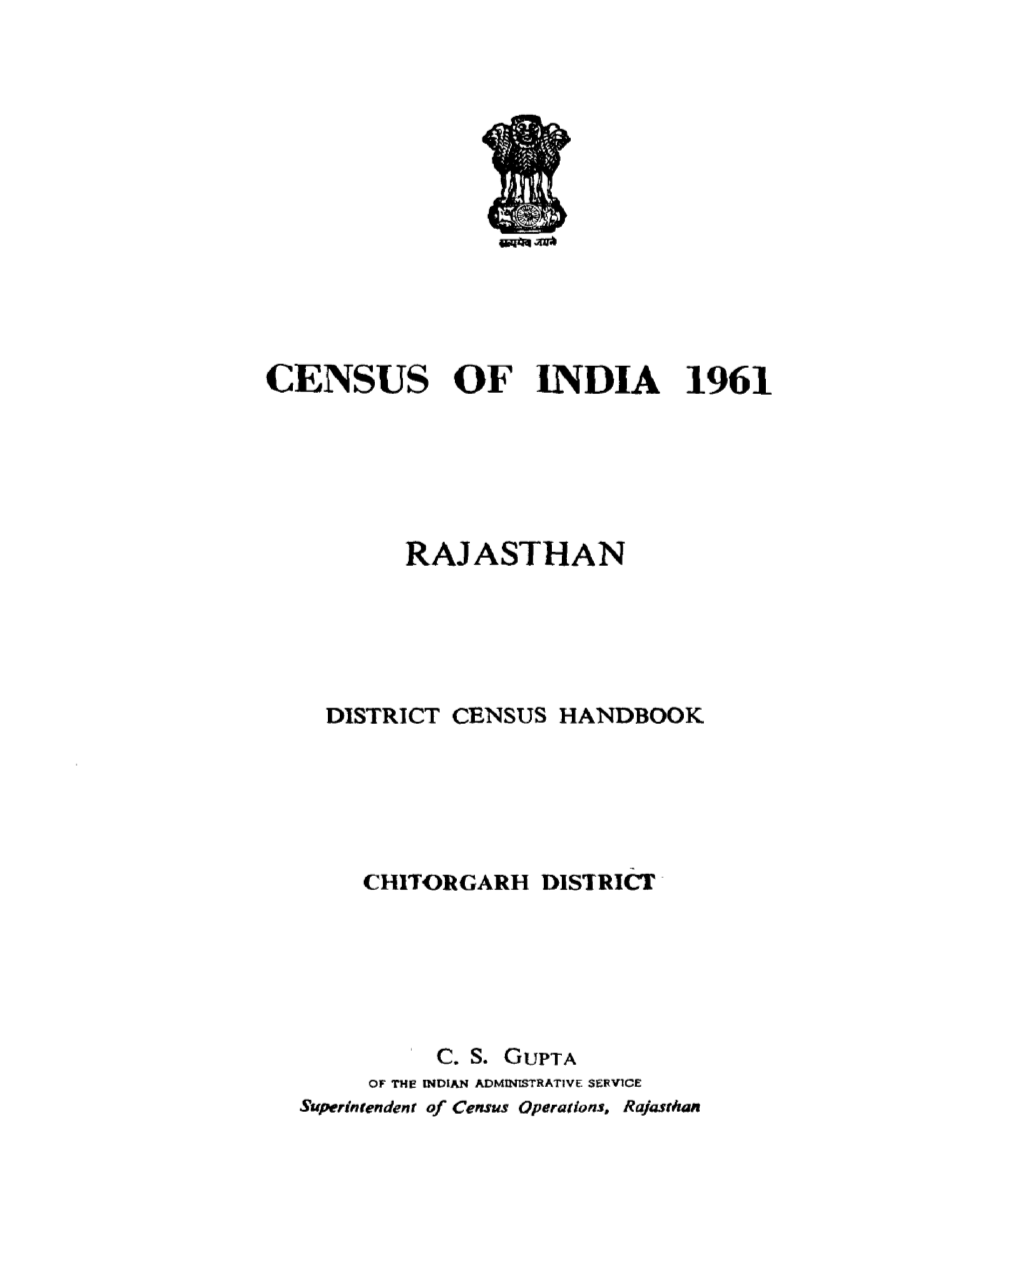 District Census Handbook, Chitograph, Rajasthan